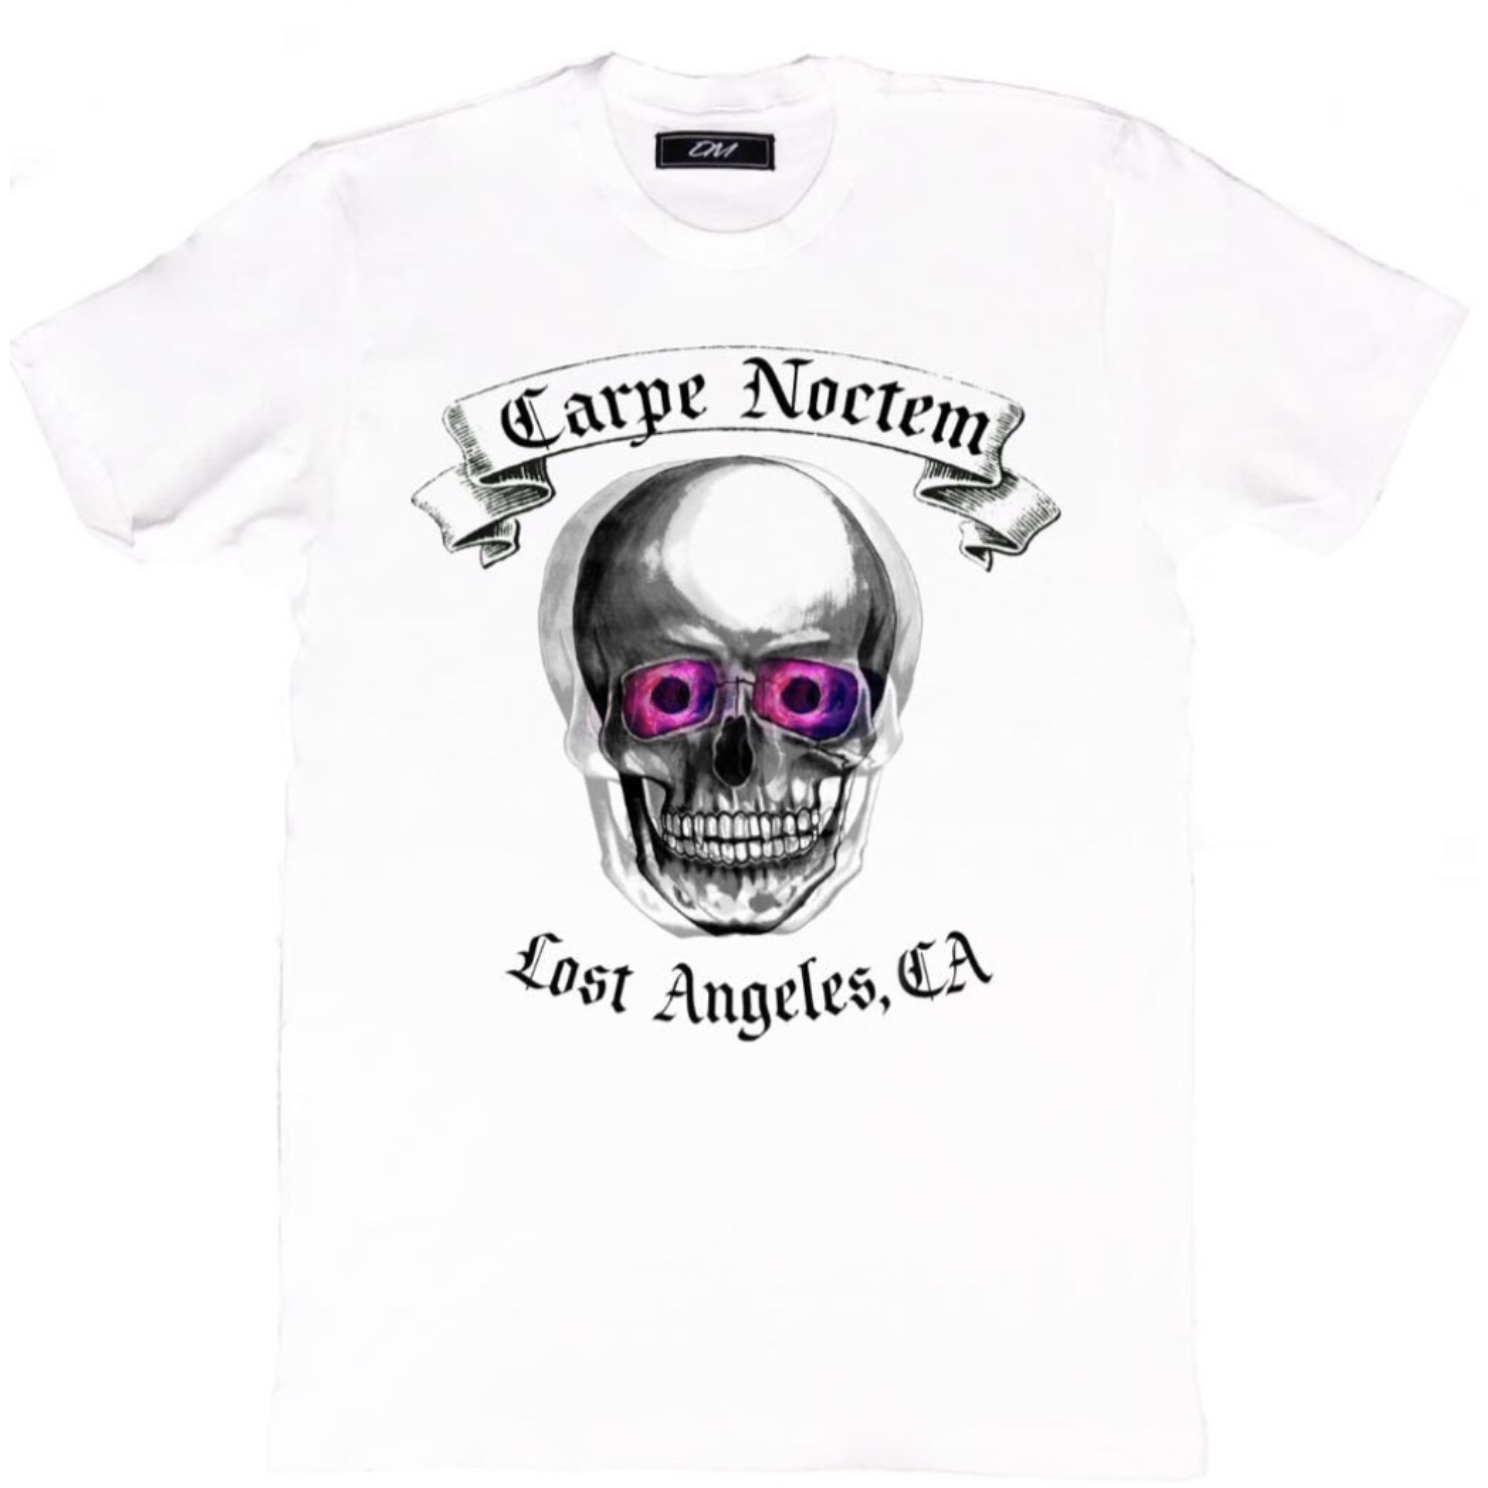 “Lost Angeles” Pt.1: Carpe Noctem Tee